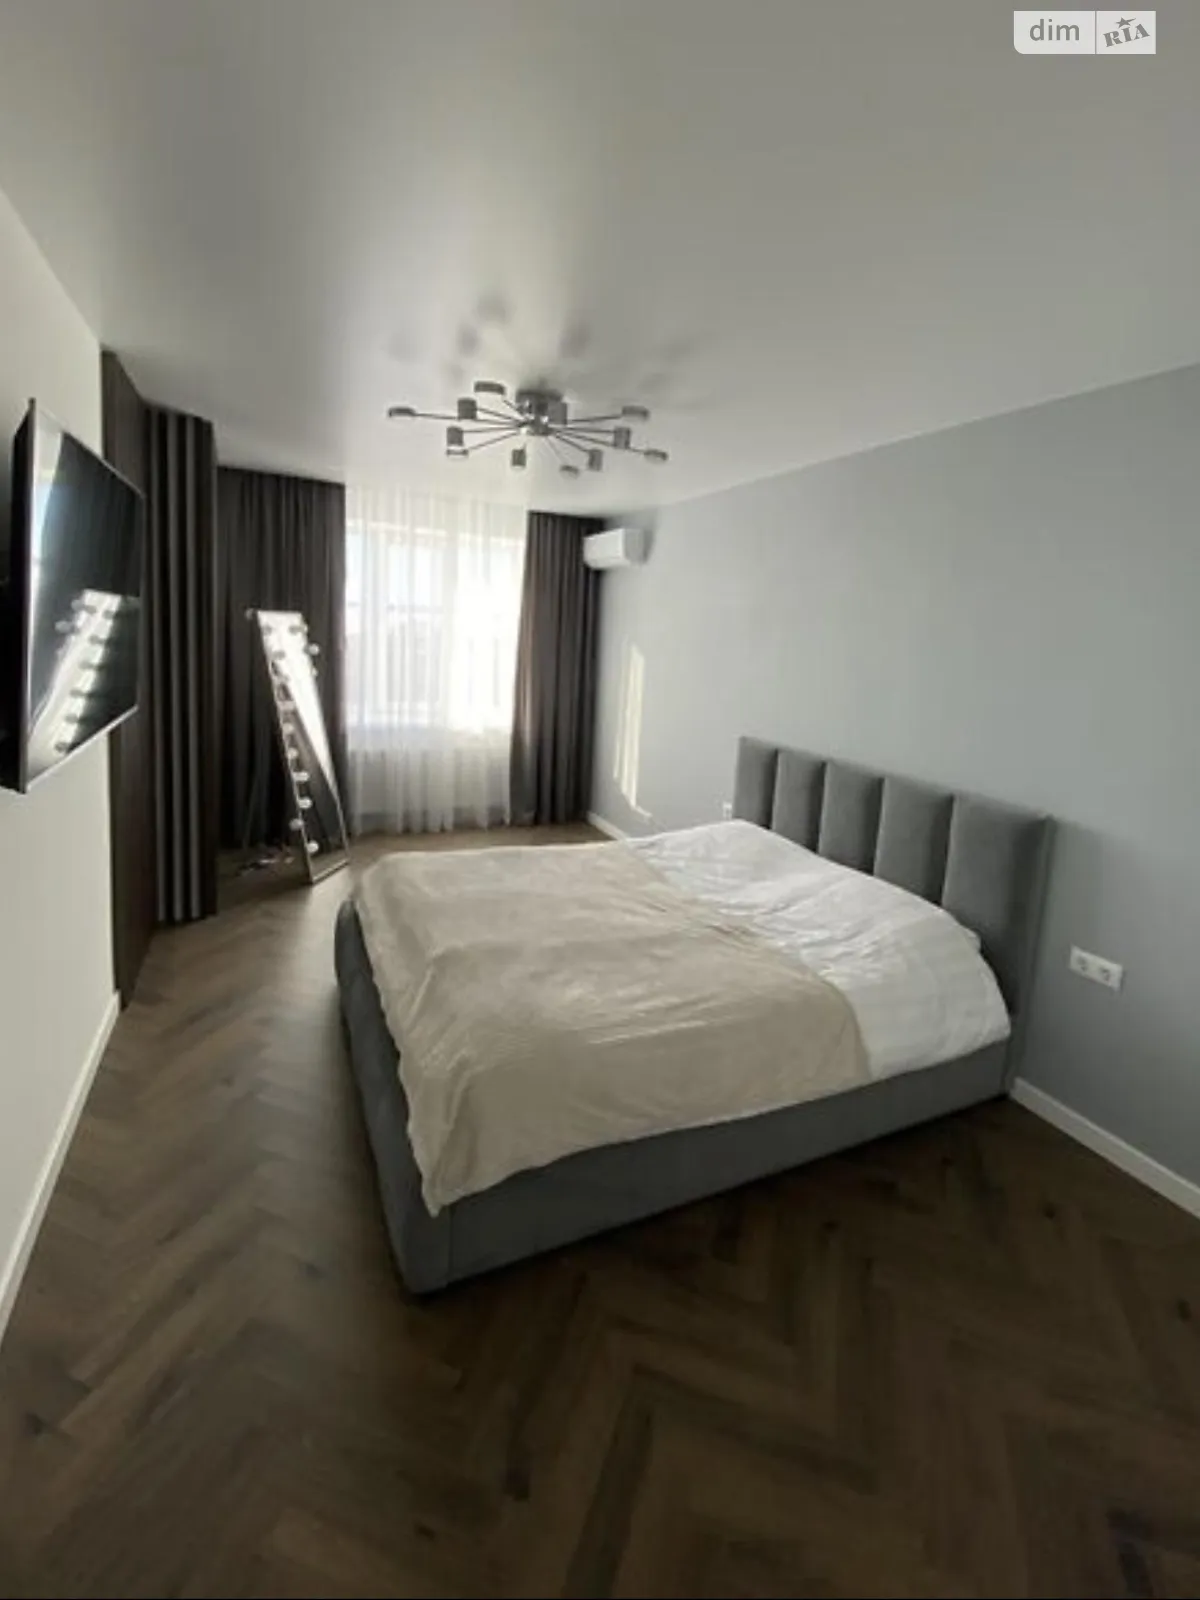 1-кімнатна квартира 40 кв. м у Тернополі, цена: 49000 $ - фото 1